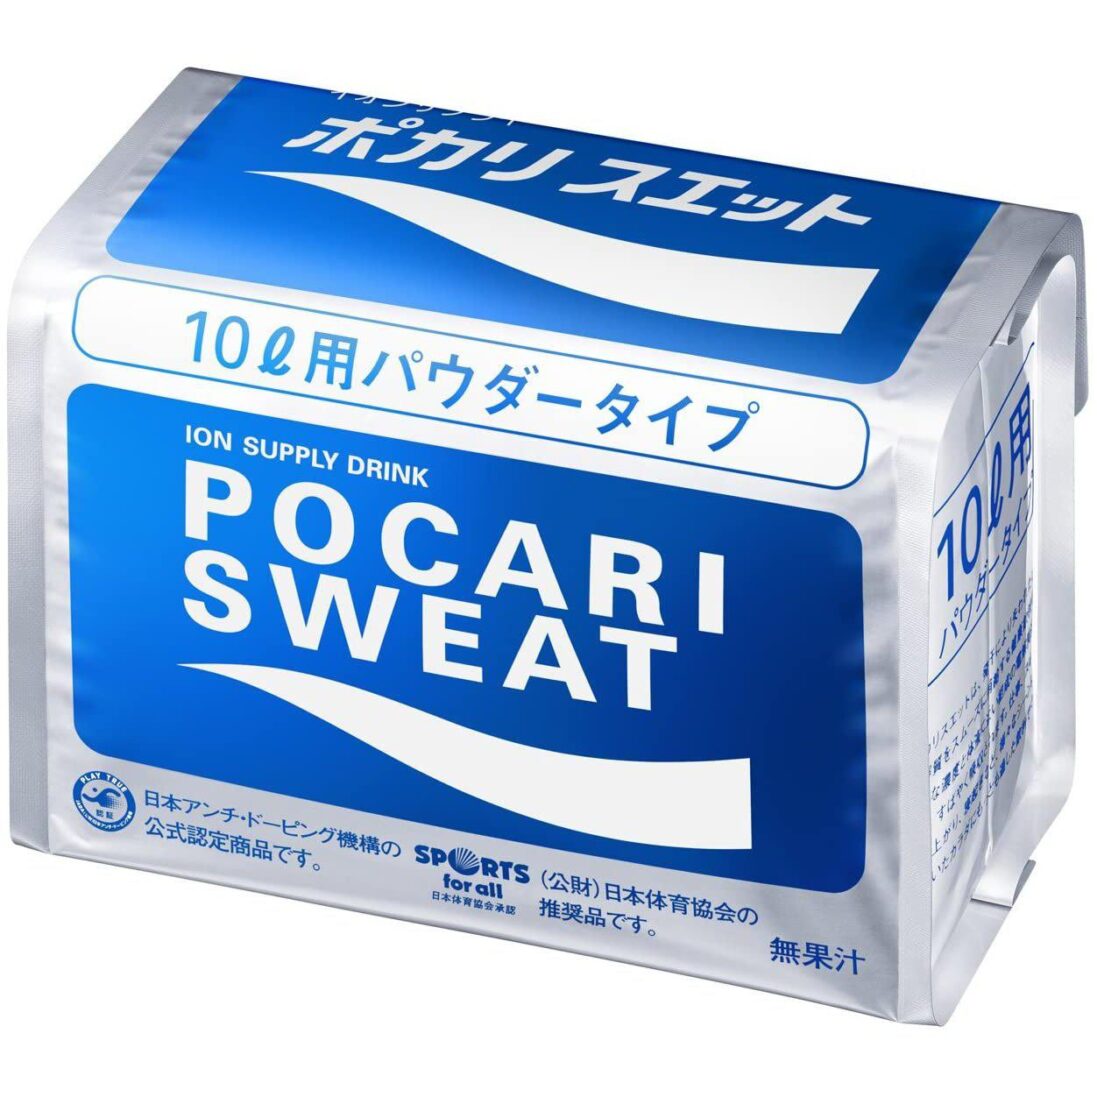 Otsuka Pocari Sweat Powder Ion Supply Energy Drink 740g for 10L